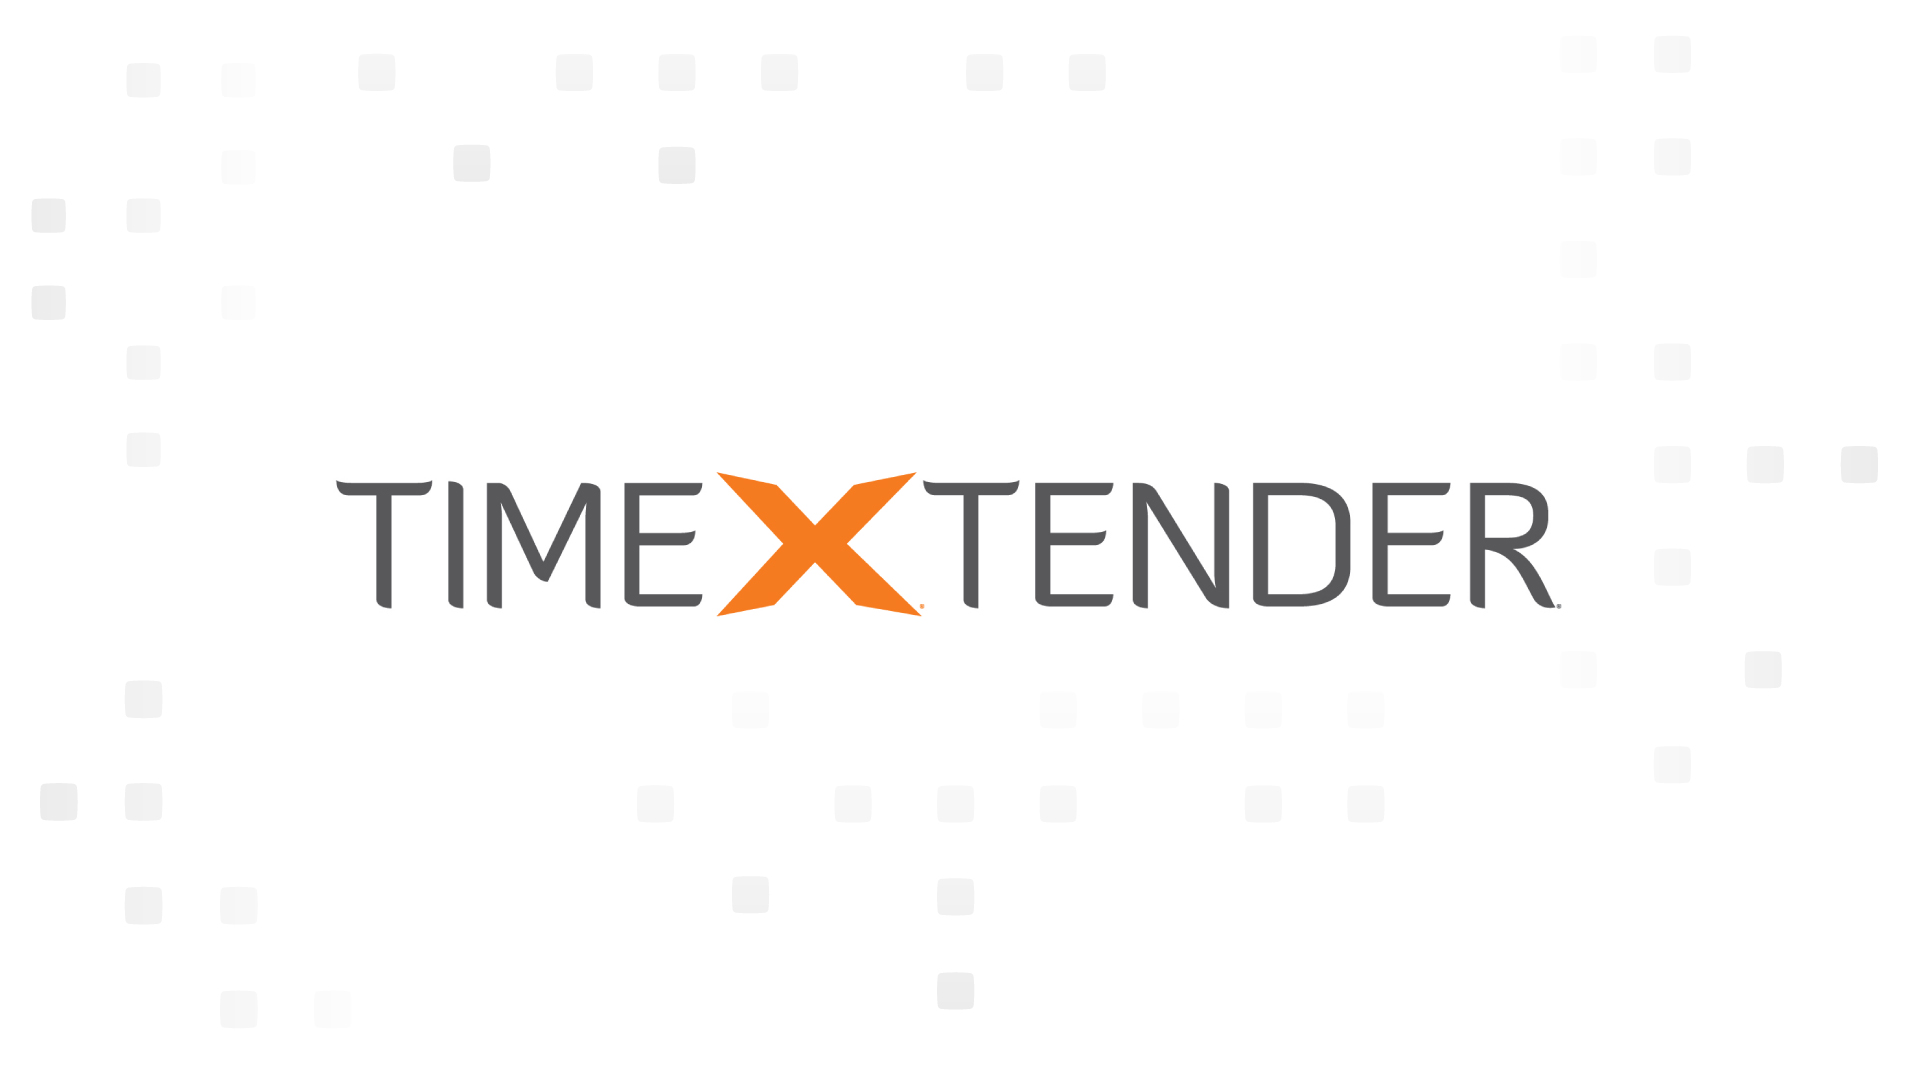 TimeXtender Awards Fast Start Partner of the Year Award to Redapt